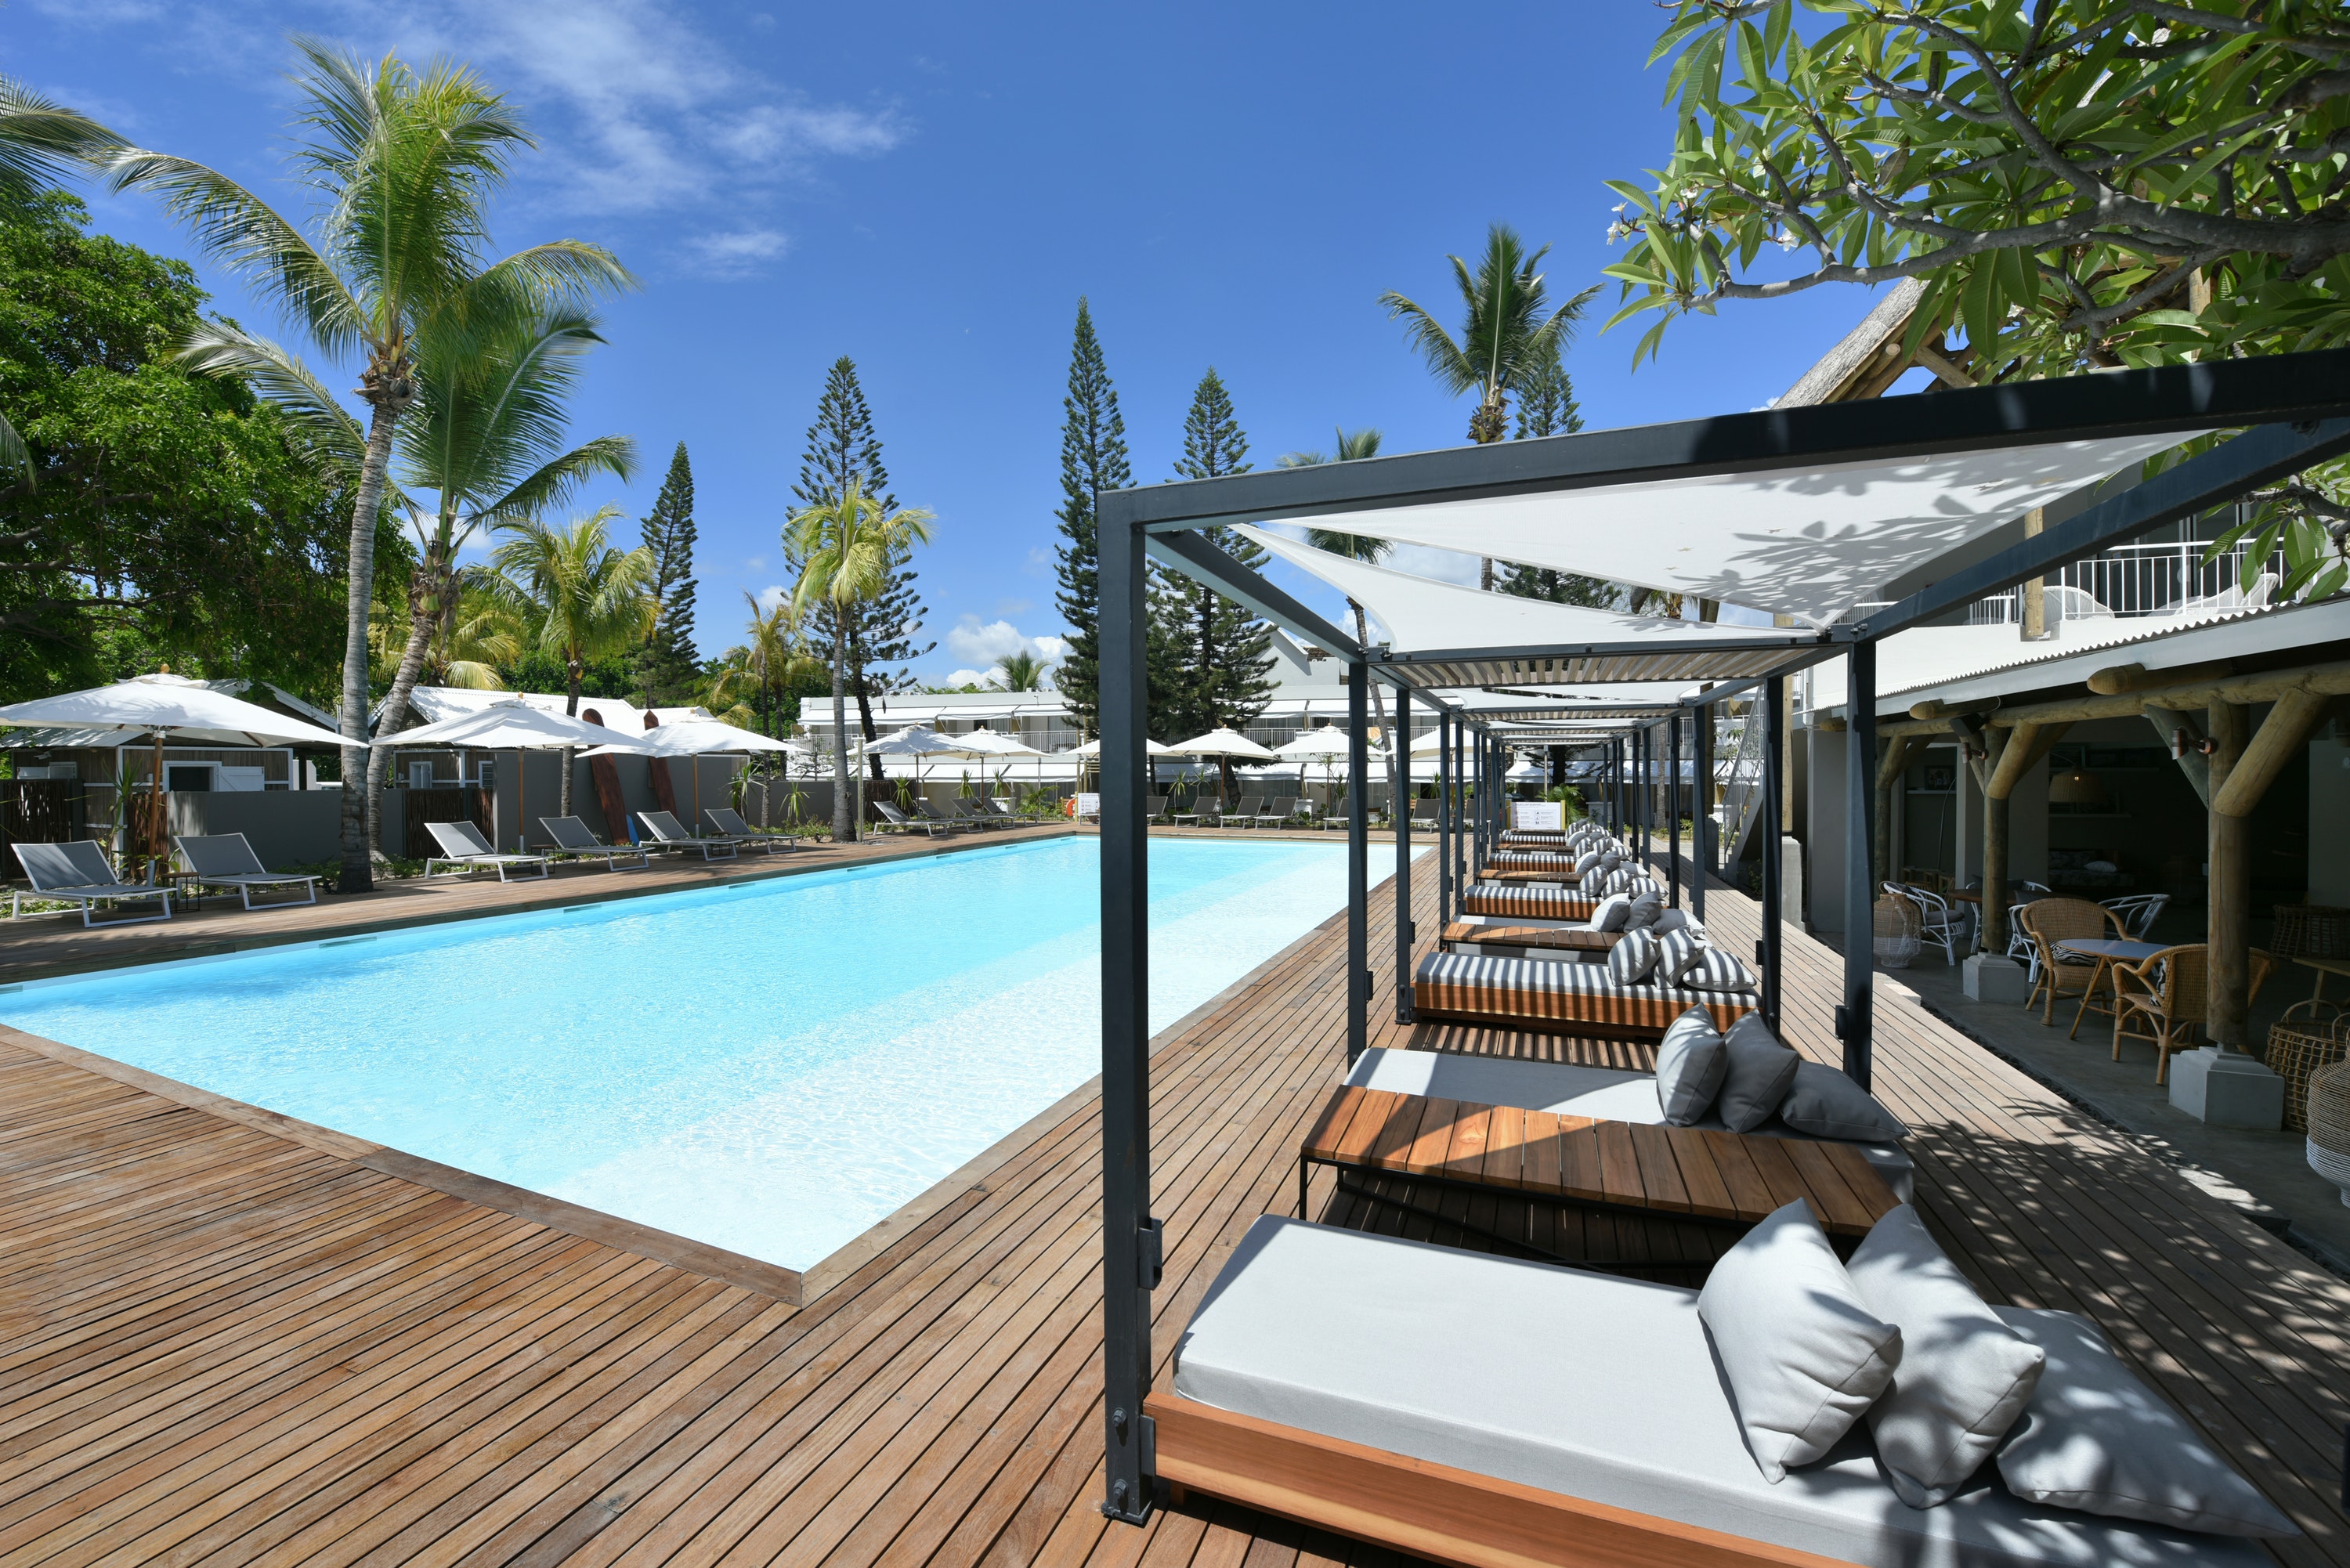 The main pool at Veranda Tamarin Hotel & Spa